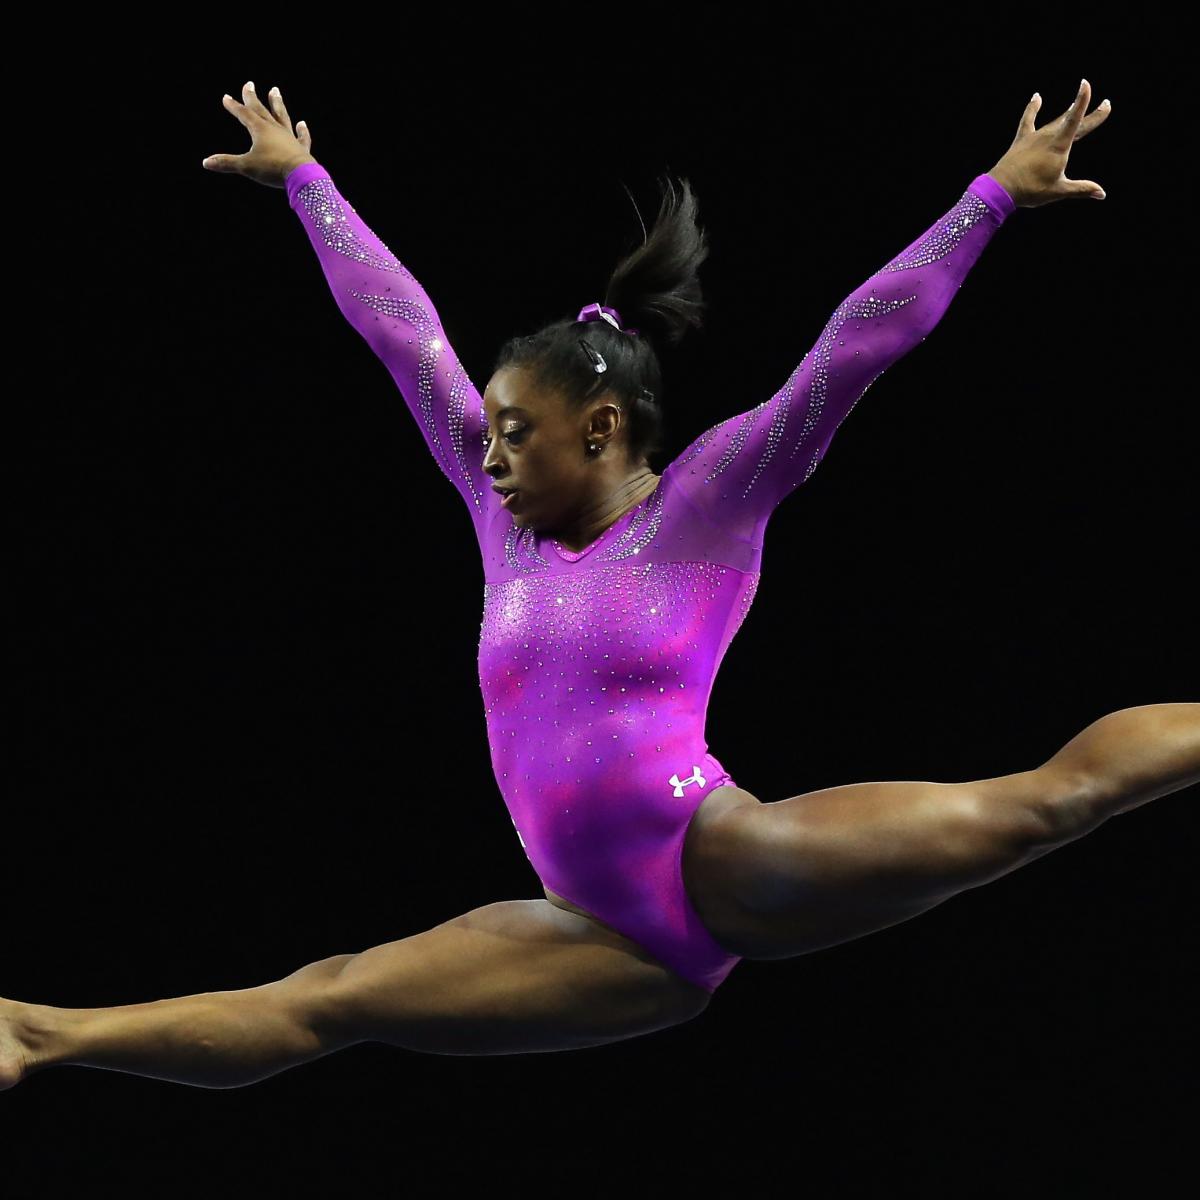 Joe Morgan's daughter stars as Stanford gymnast